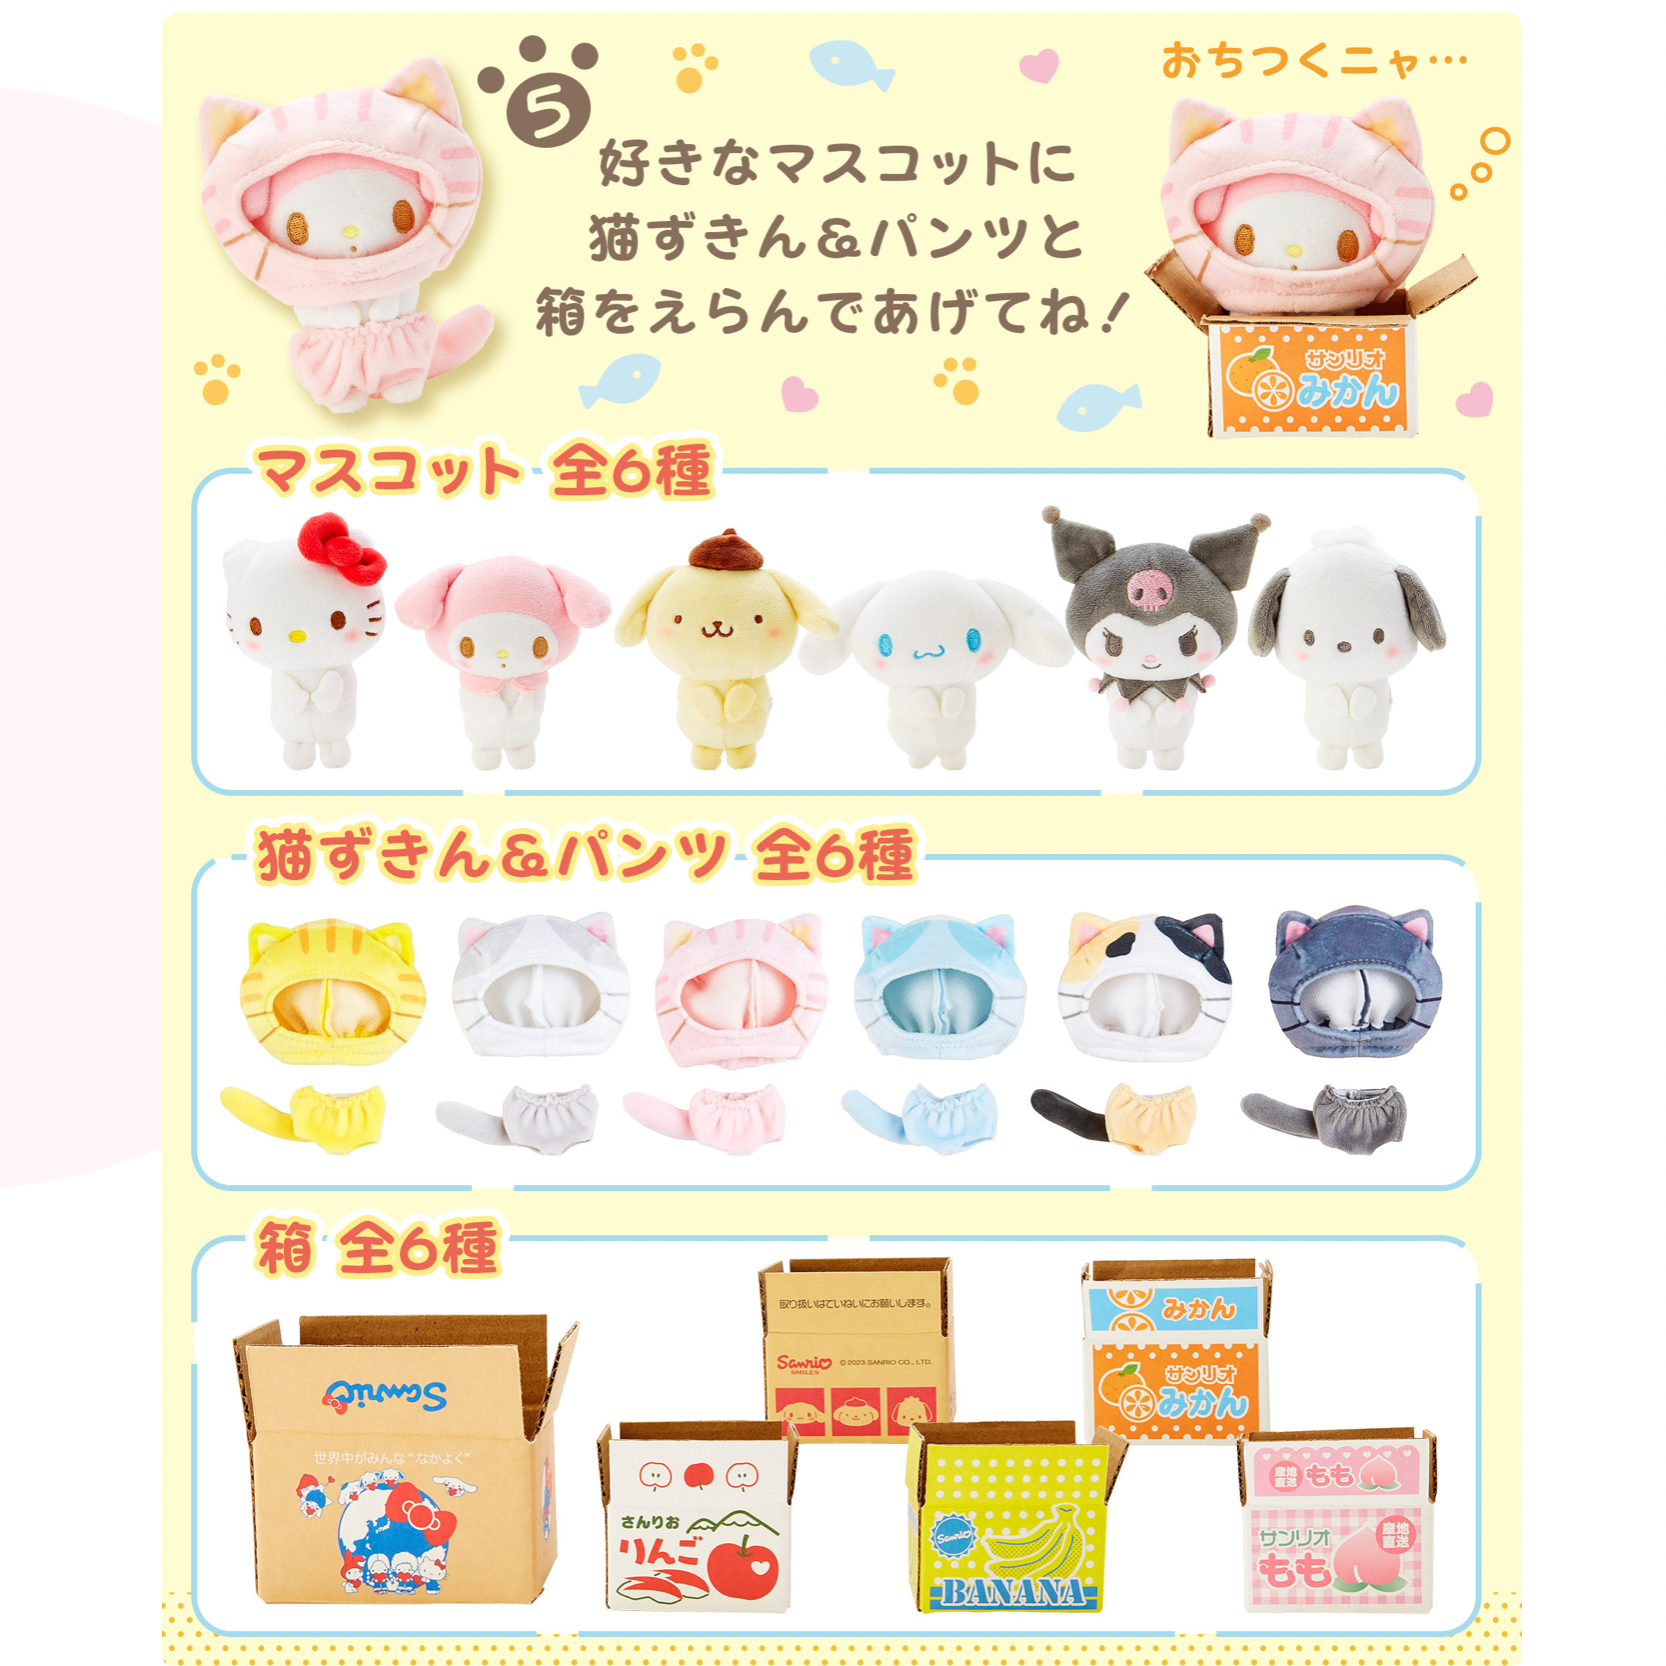 Sanrio Characters Beauty Series Figure – Pieceofcake0716